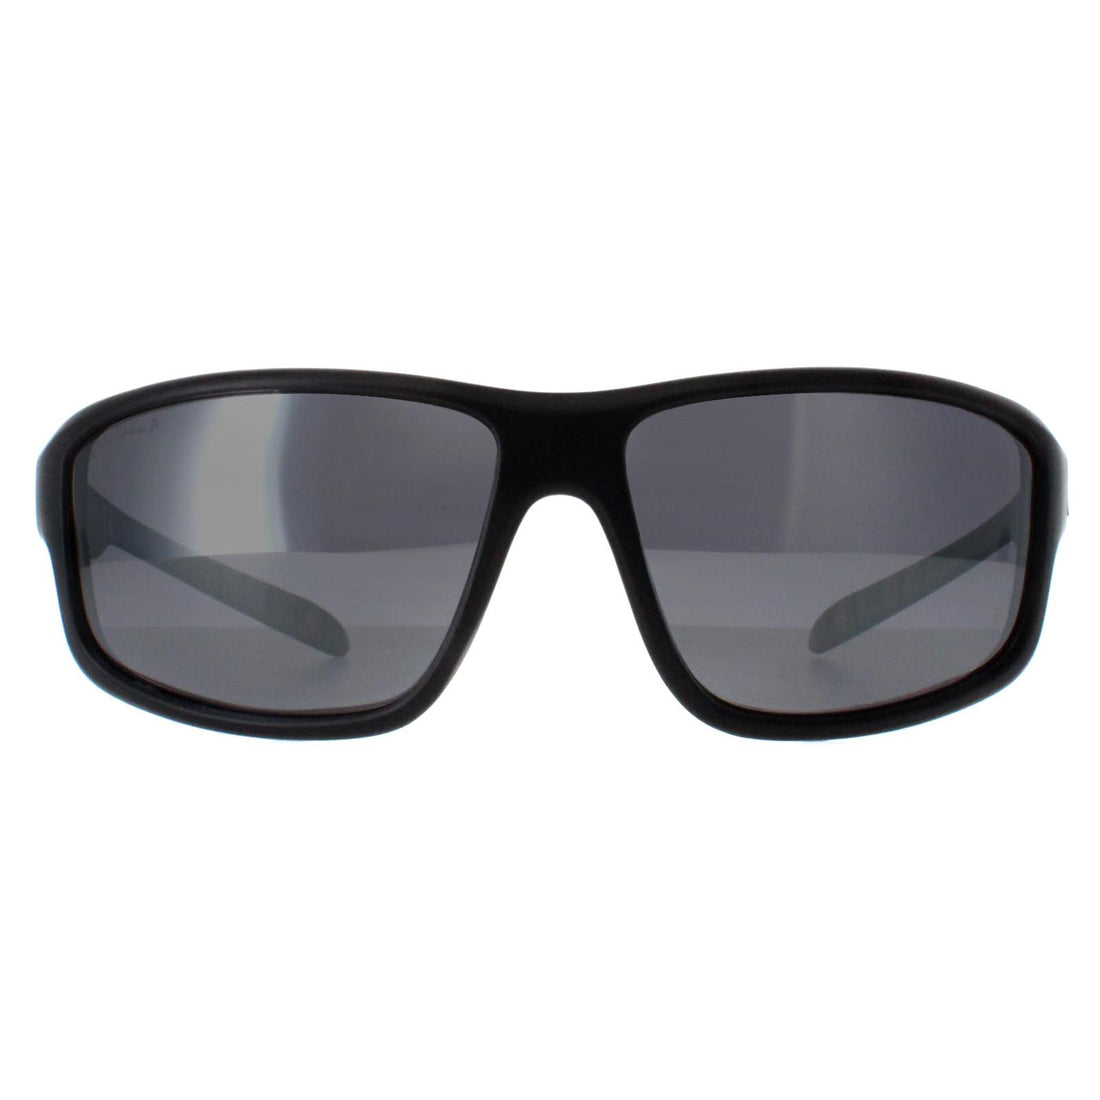 Montana SP313 Sunglasses Black Revo Mirror Polarized